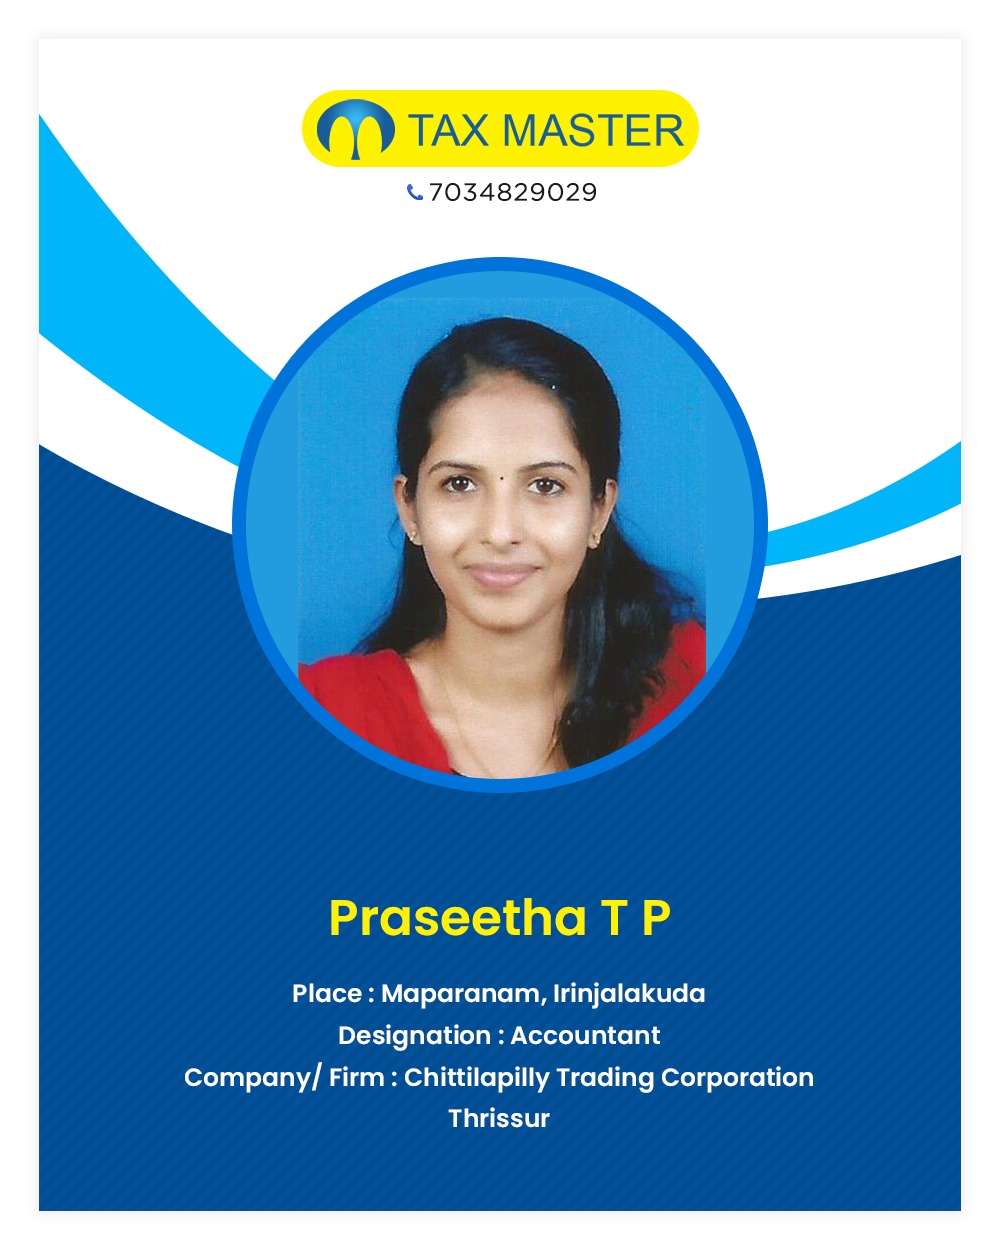 Praseetha Tax training firm in thrissur